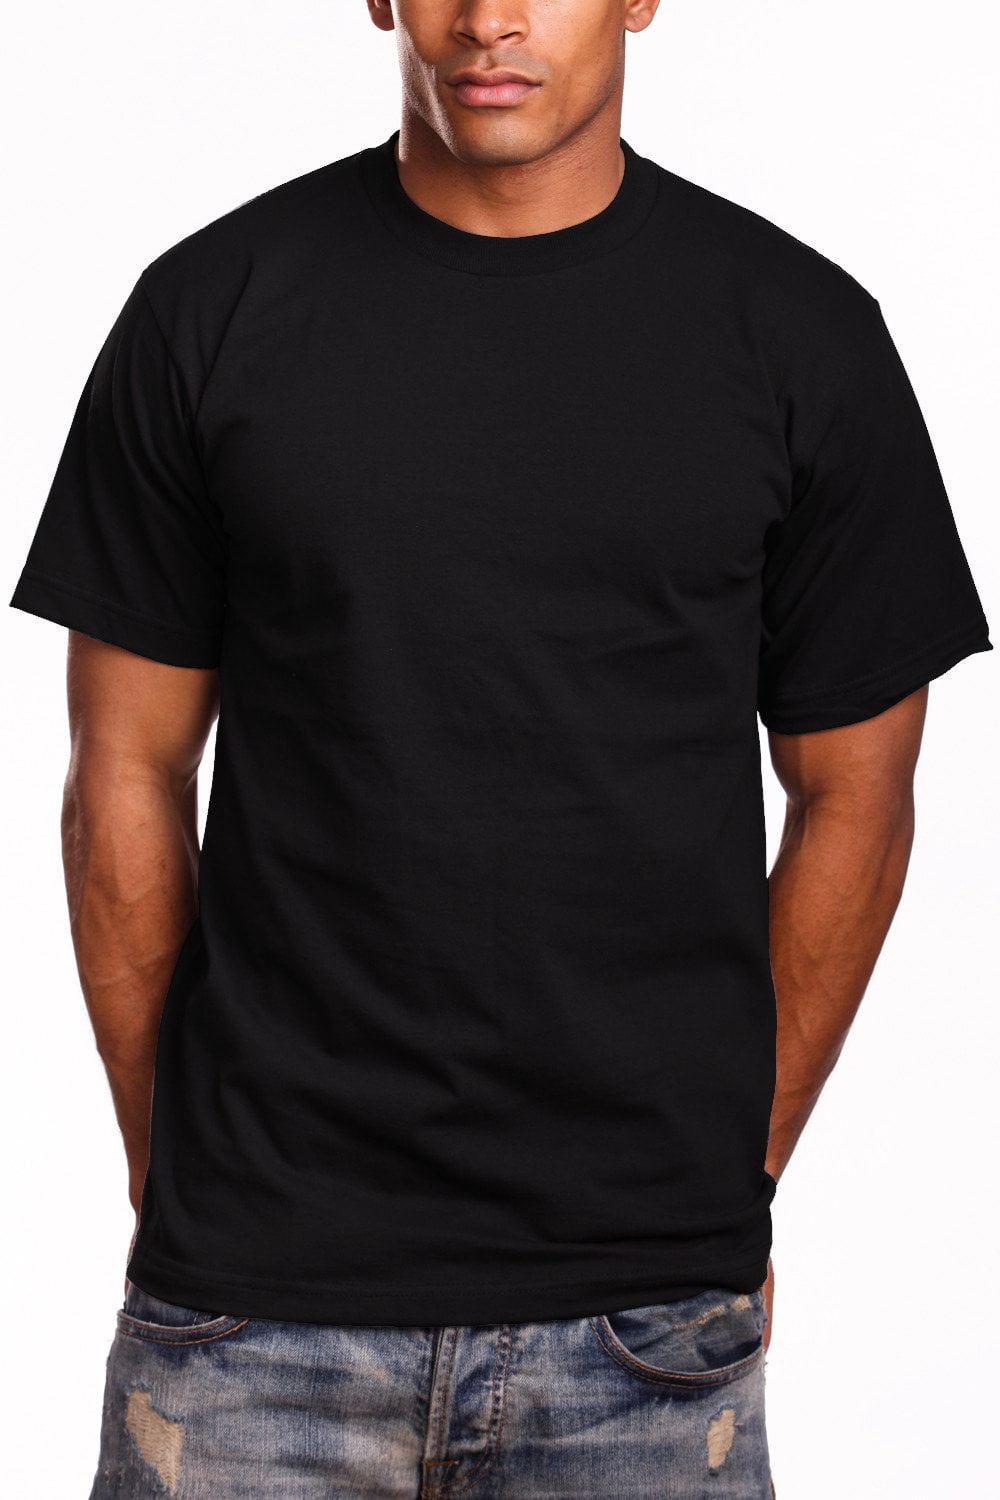 lejlighed Syd bruser Pro 5 Superheavy Short Sleeve T-shirt,Charcoal Grey,4XL - Walmart.com